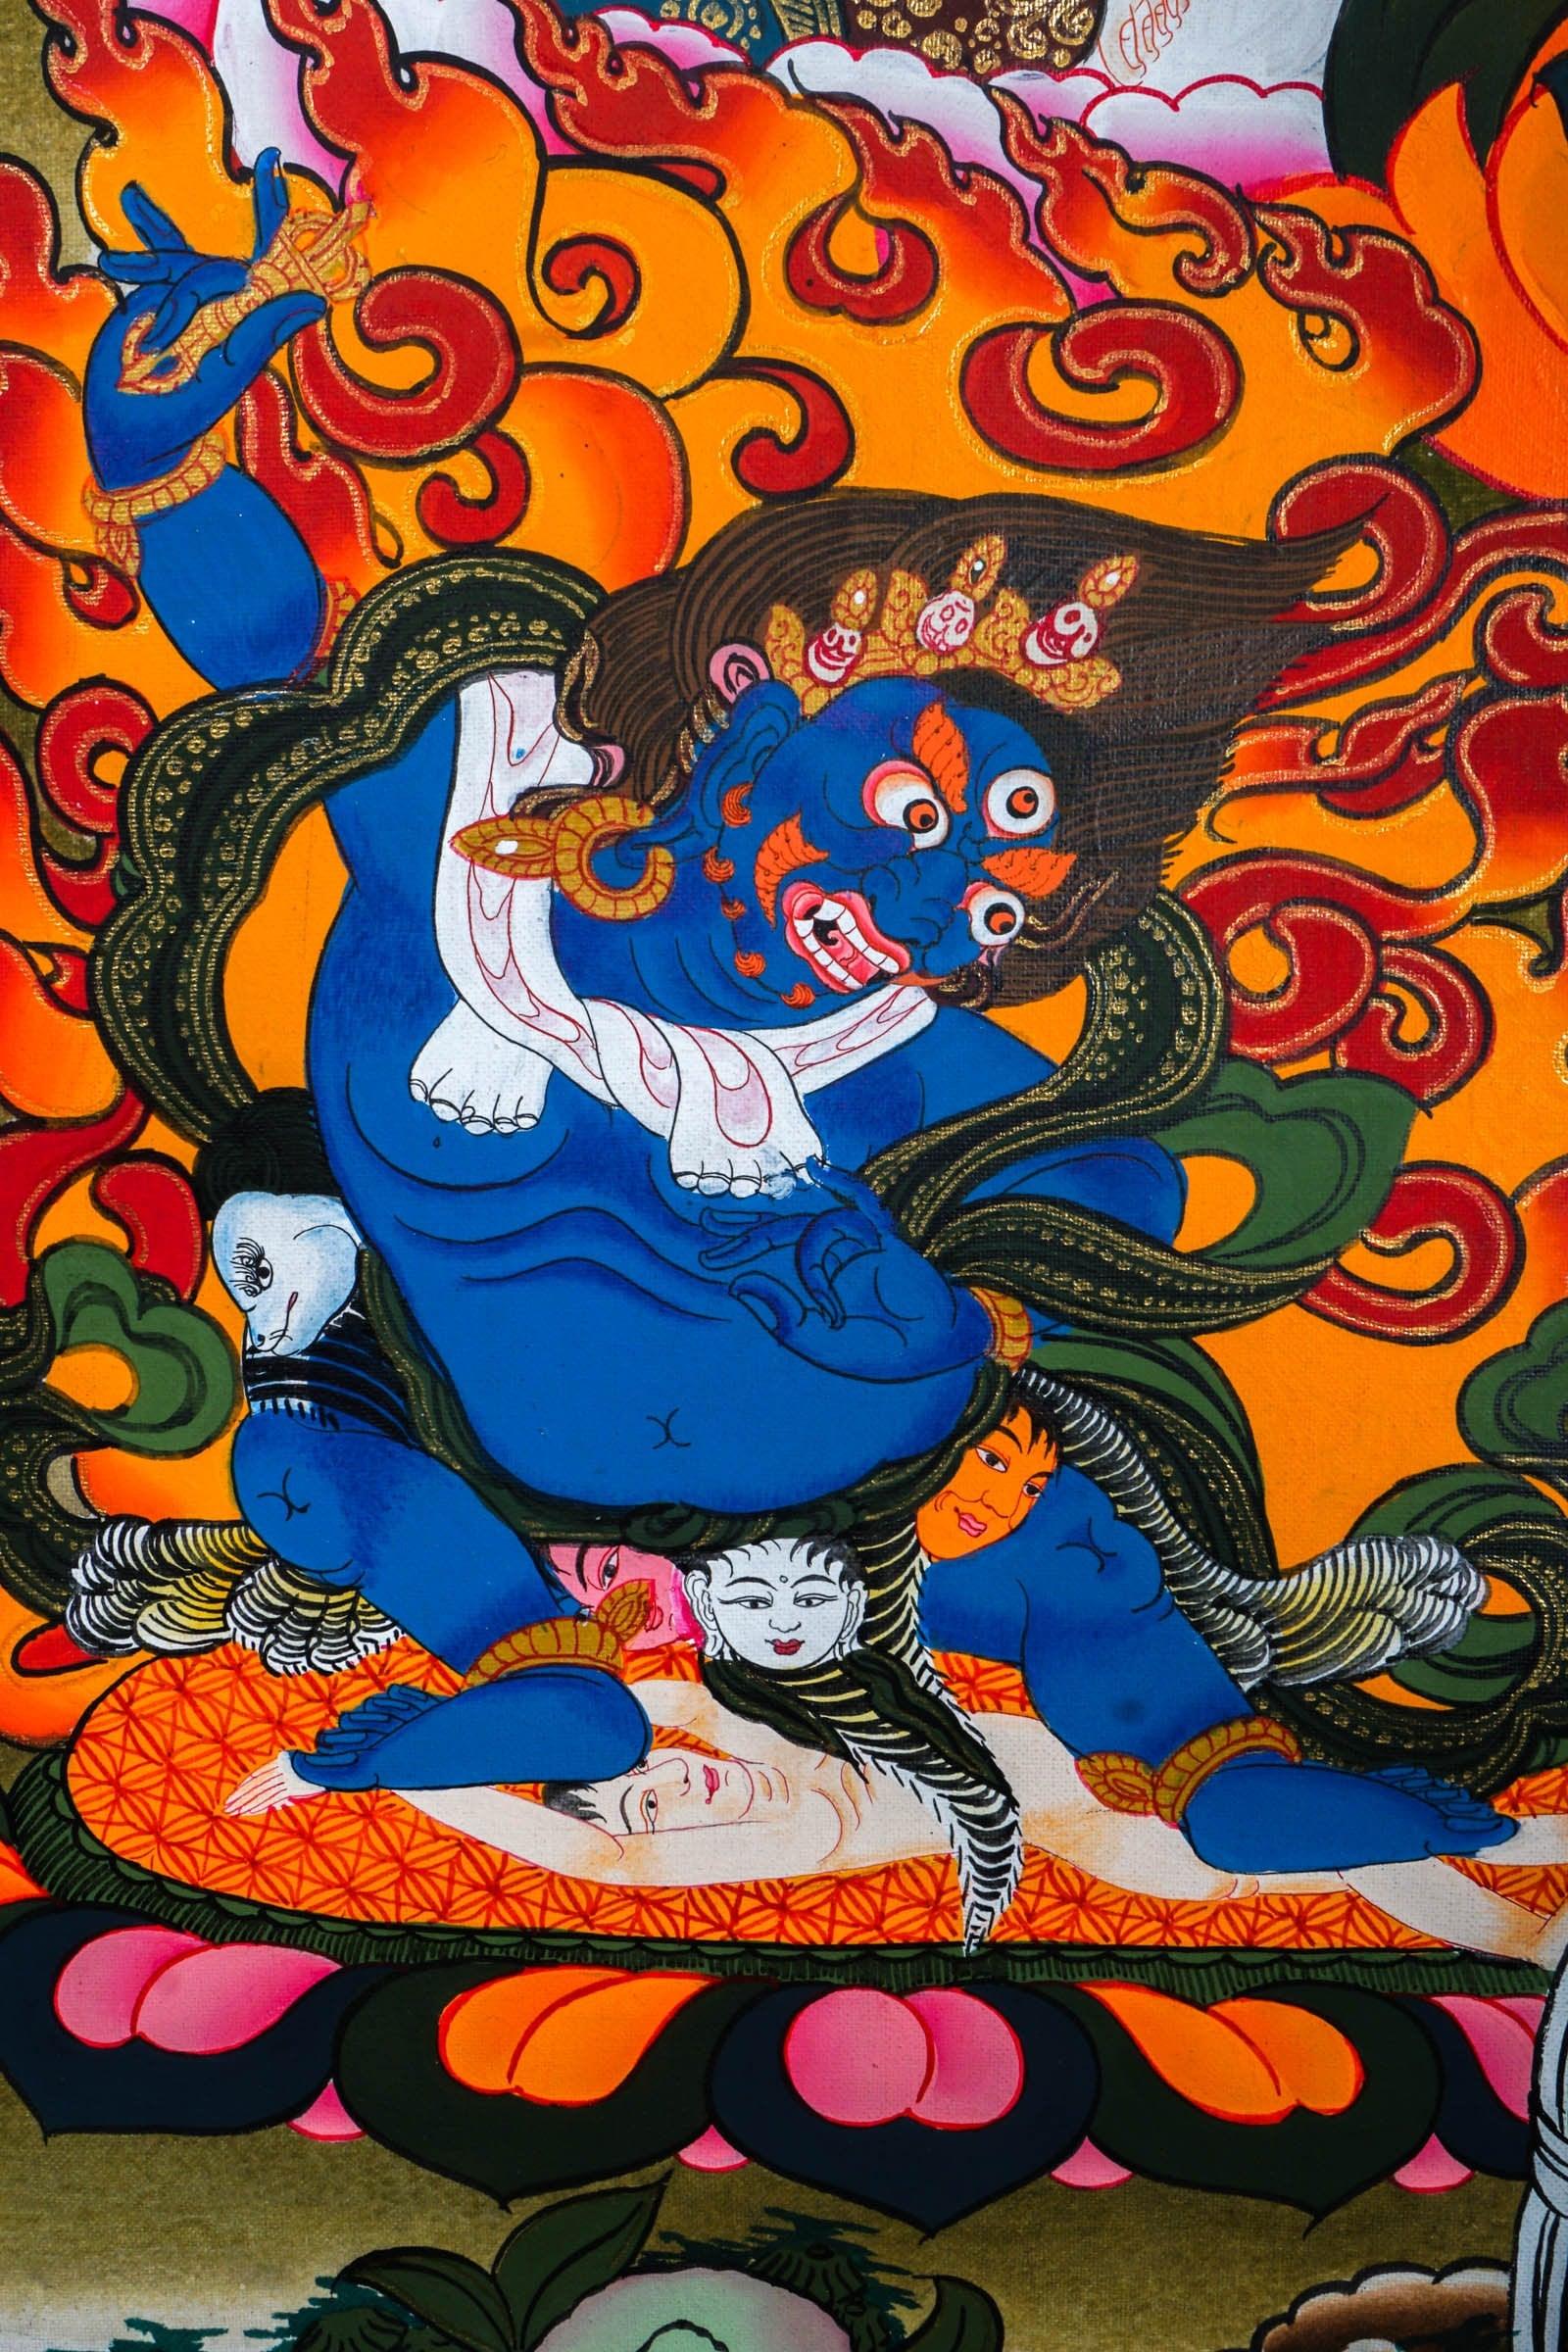 Guru Rinpoche Thangka Art - Himalayas Shop